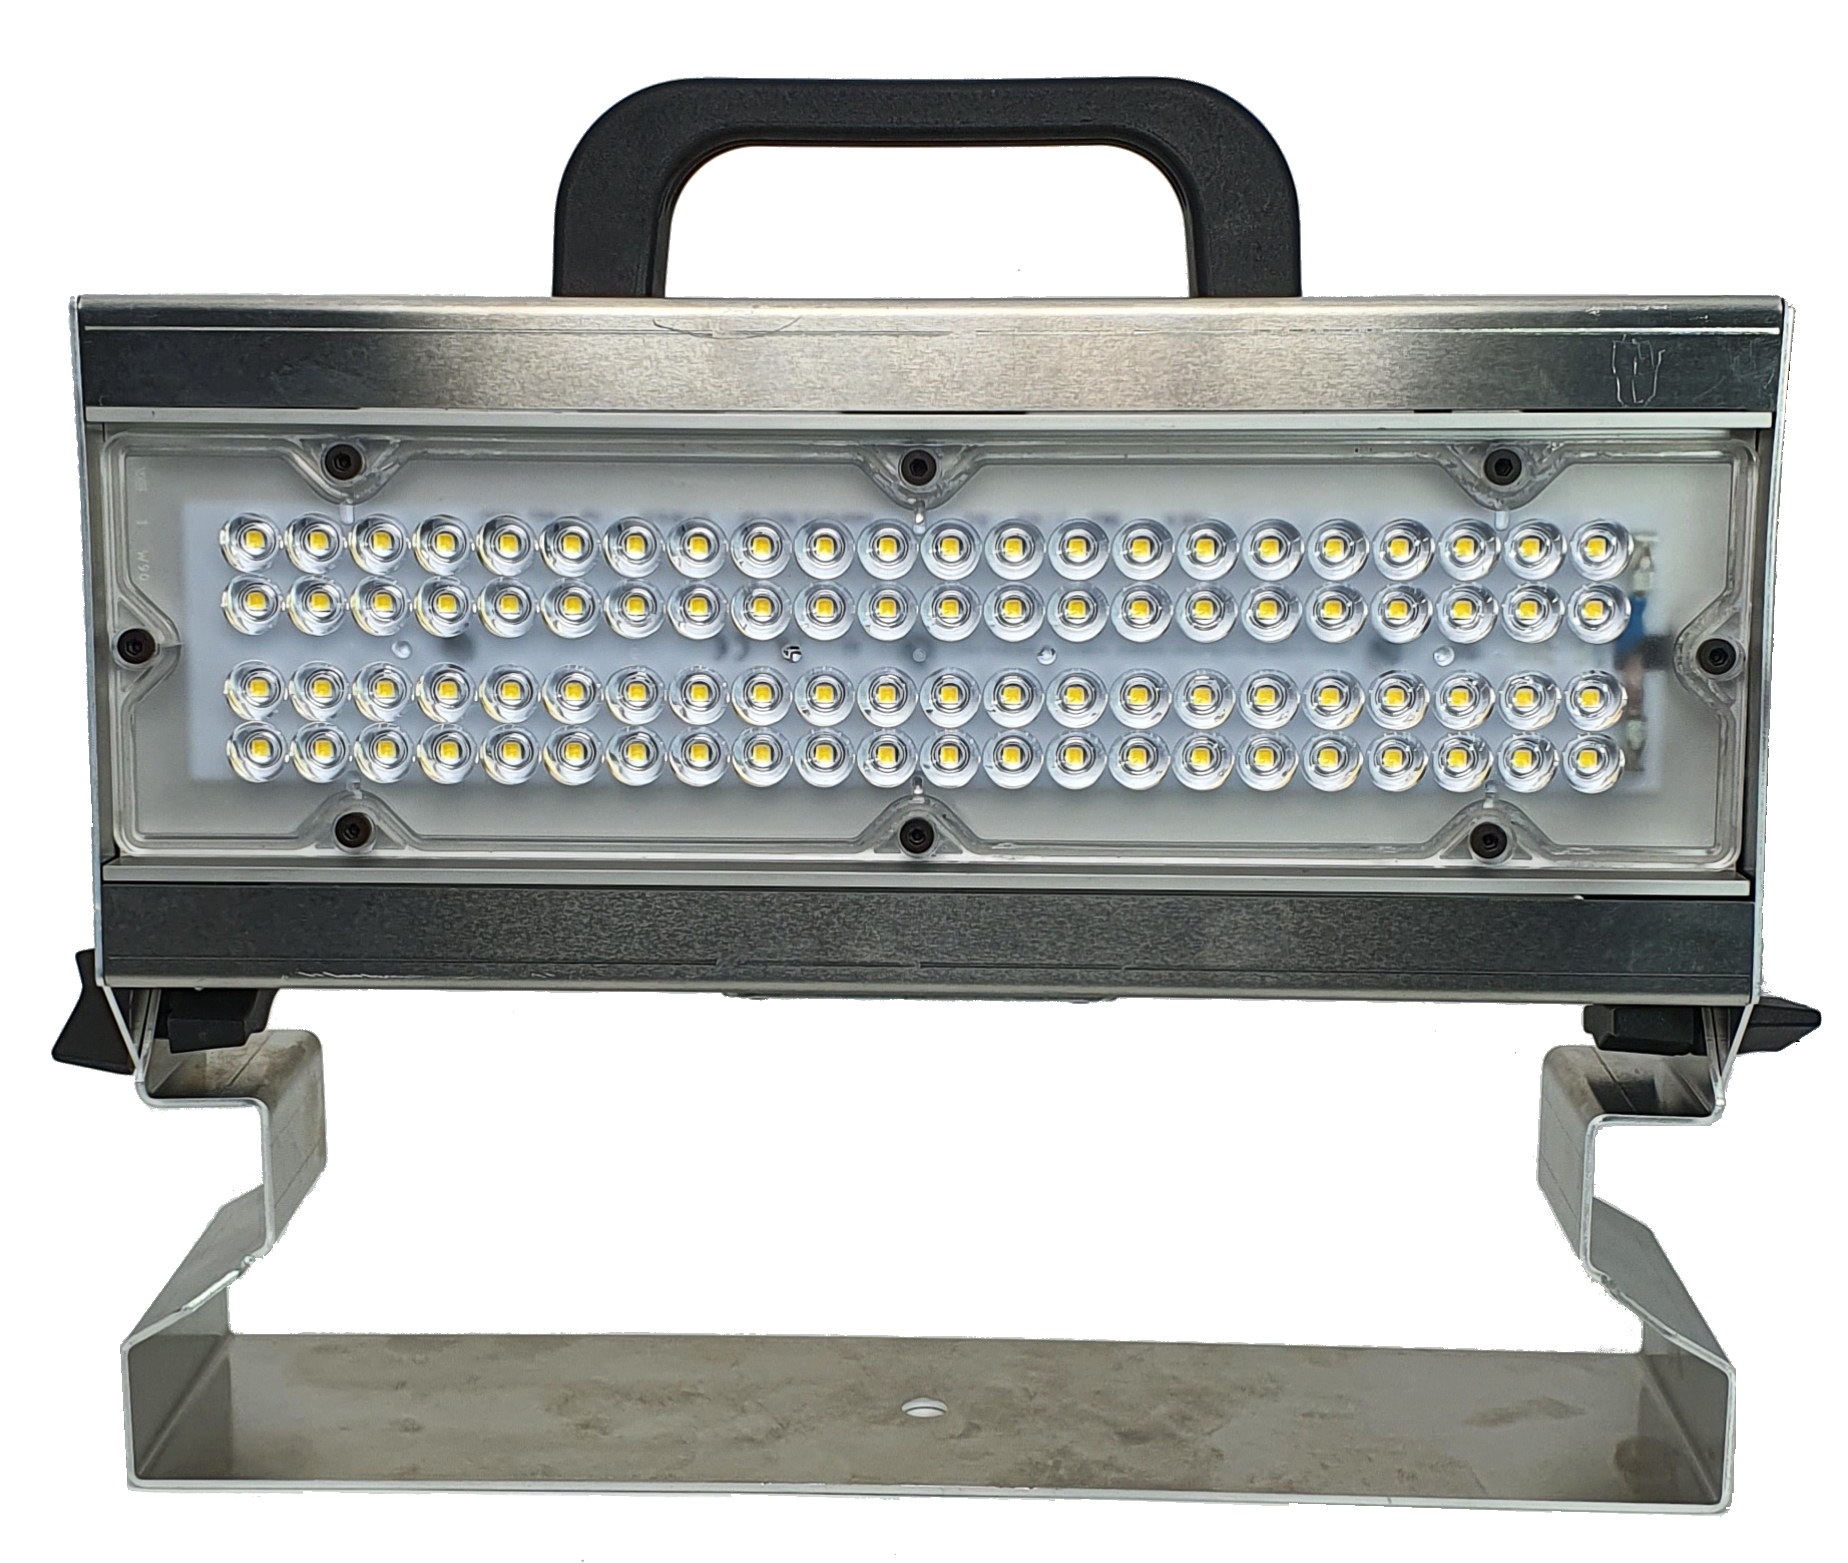 Work spotlight 50 - IP 65 LED spotlight with 7,600 lumens